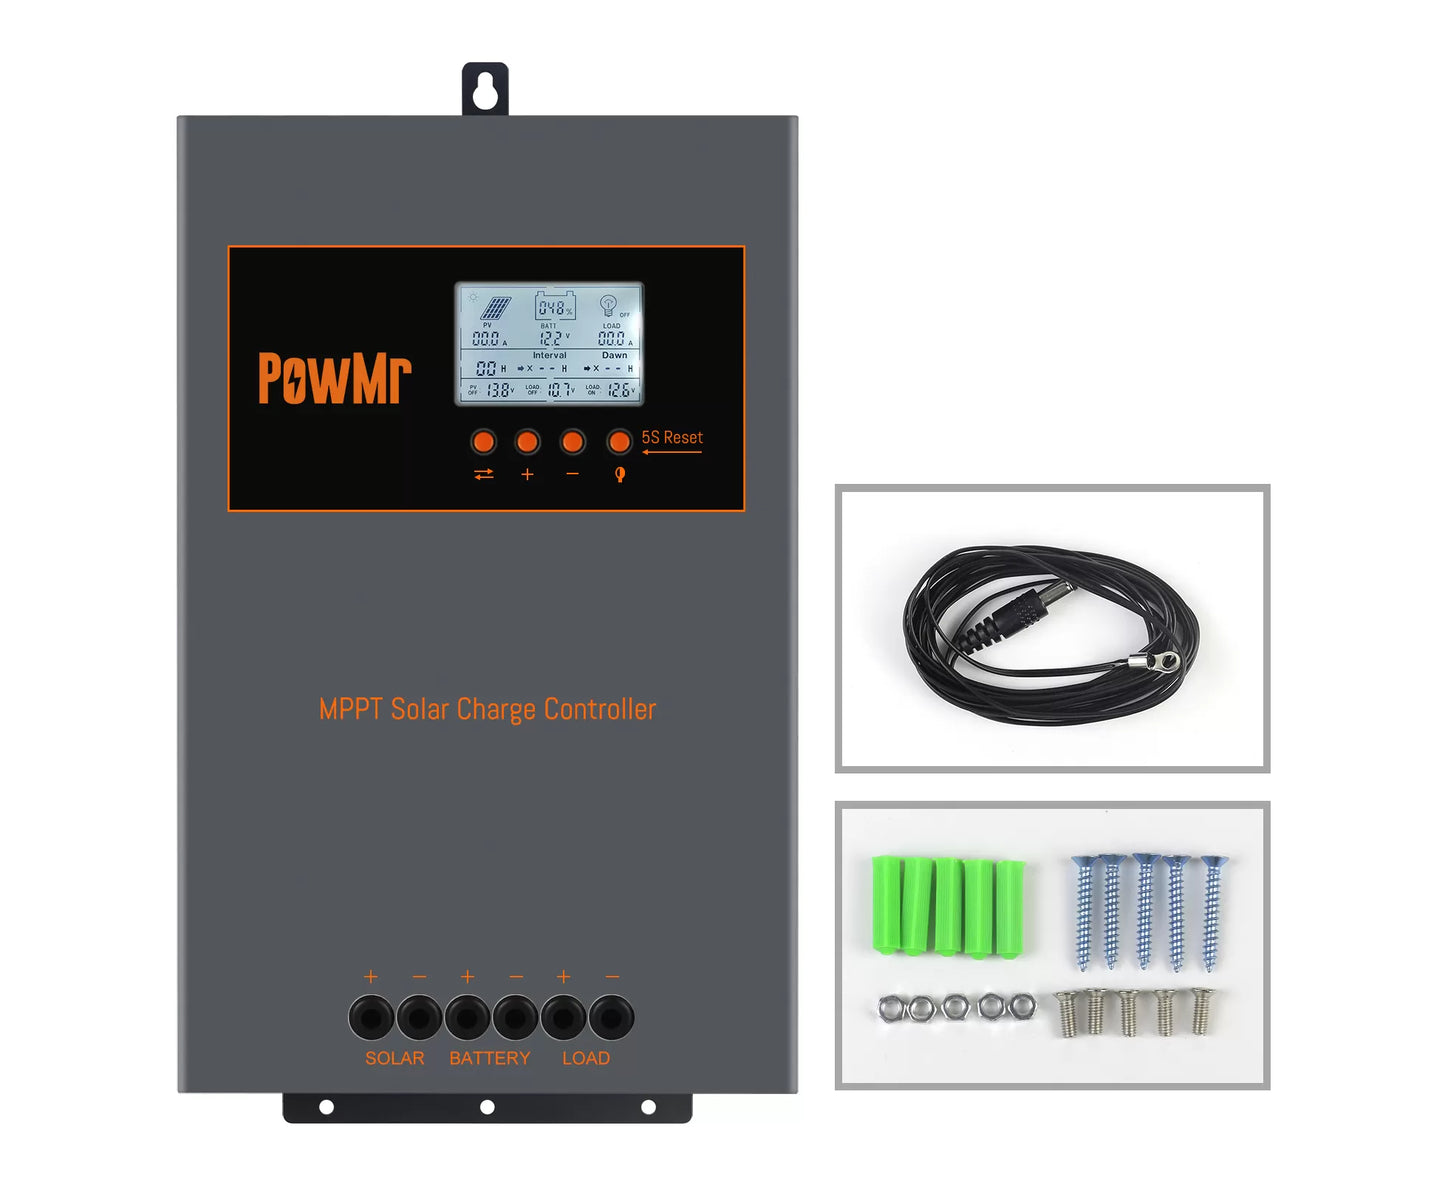 POW-K48100A - PowMr 100A MPPT Solar Charge Controller 12/24/48V DC automatically identifying